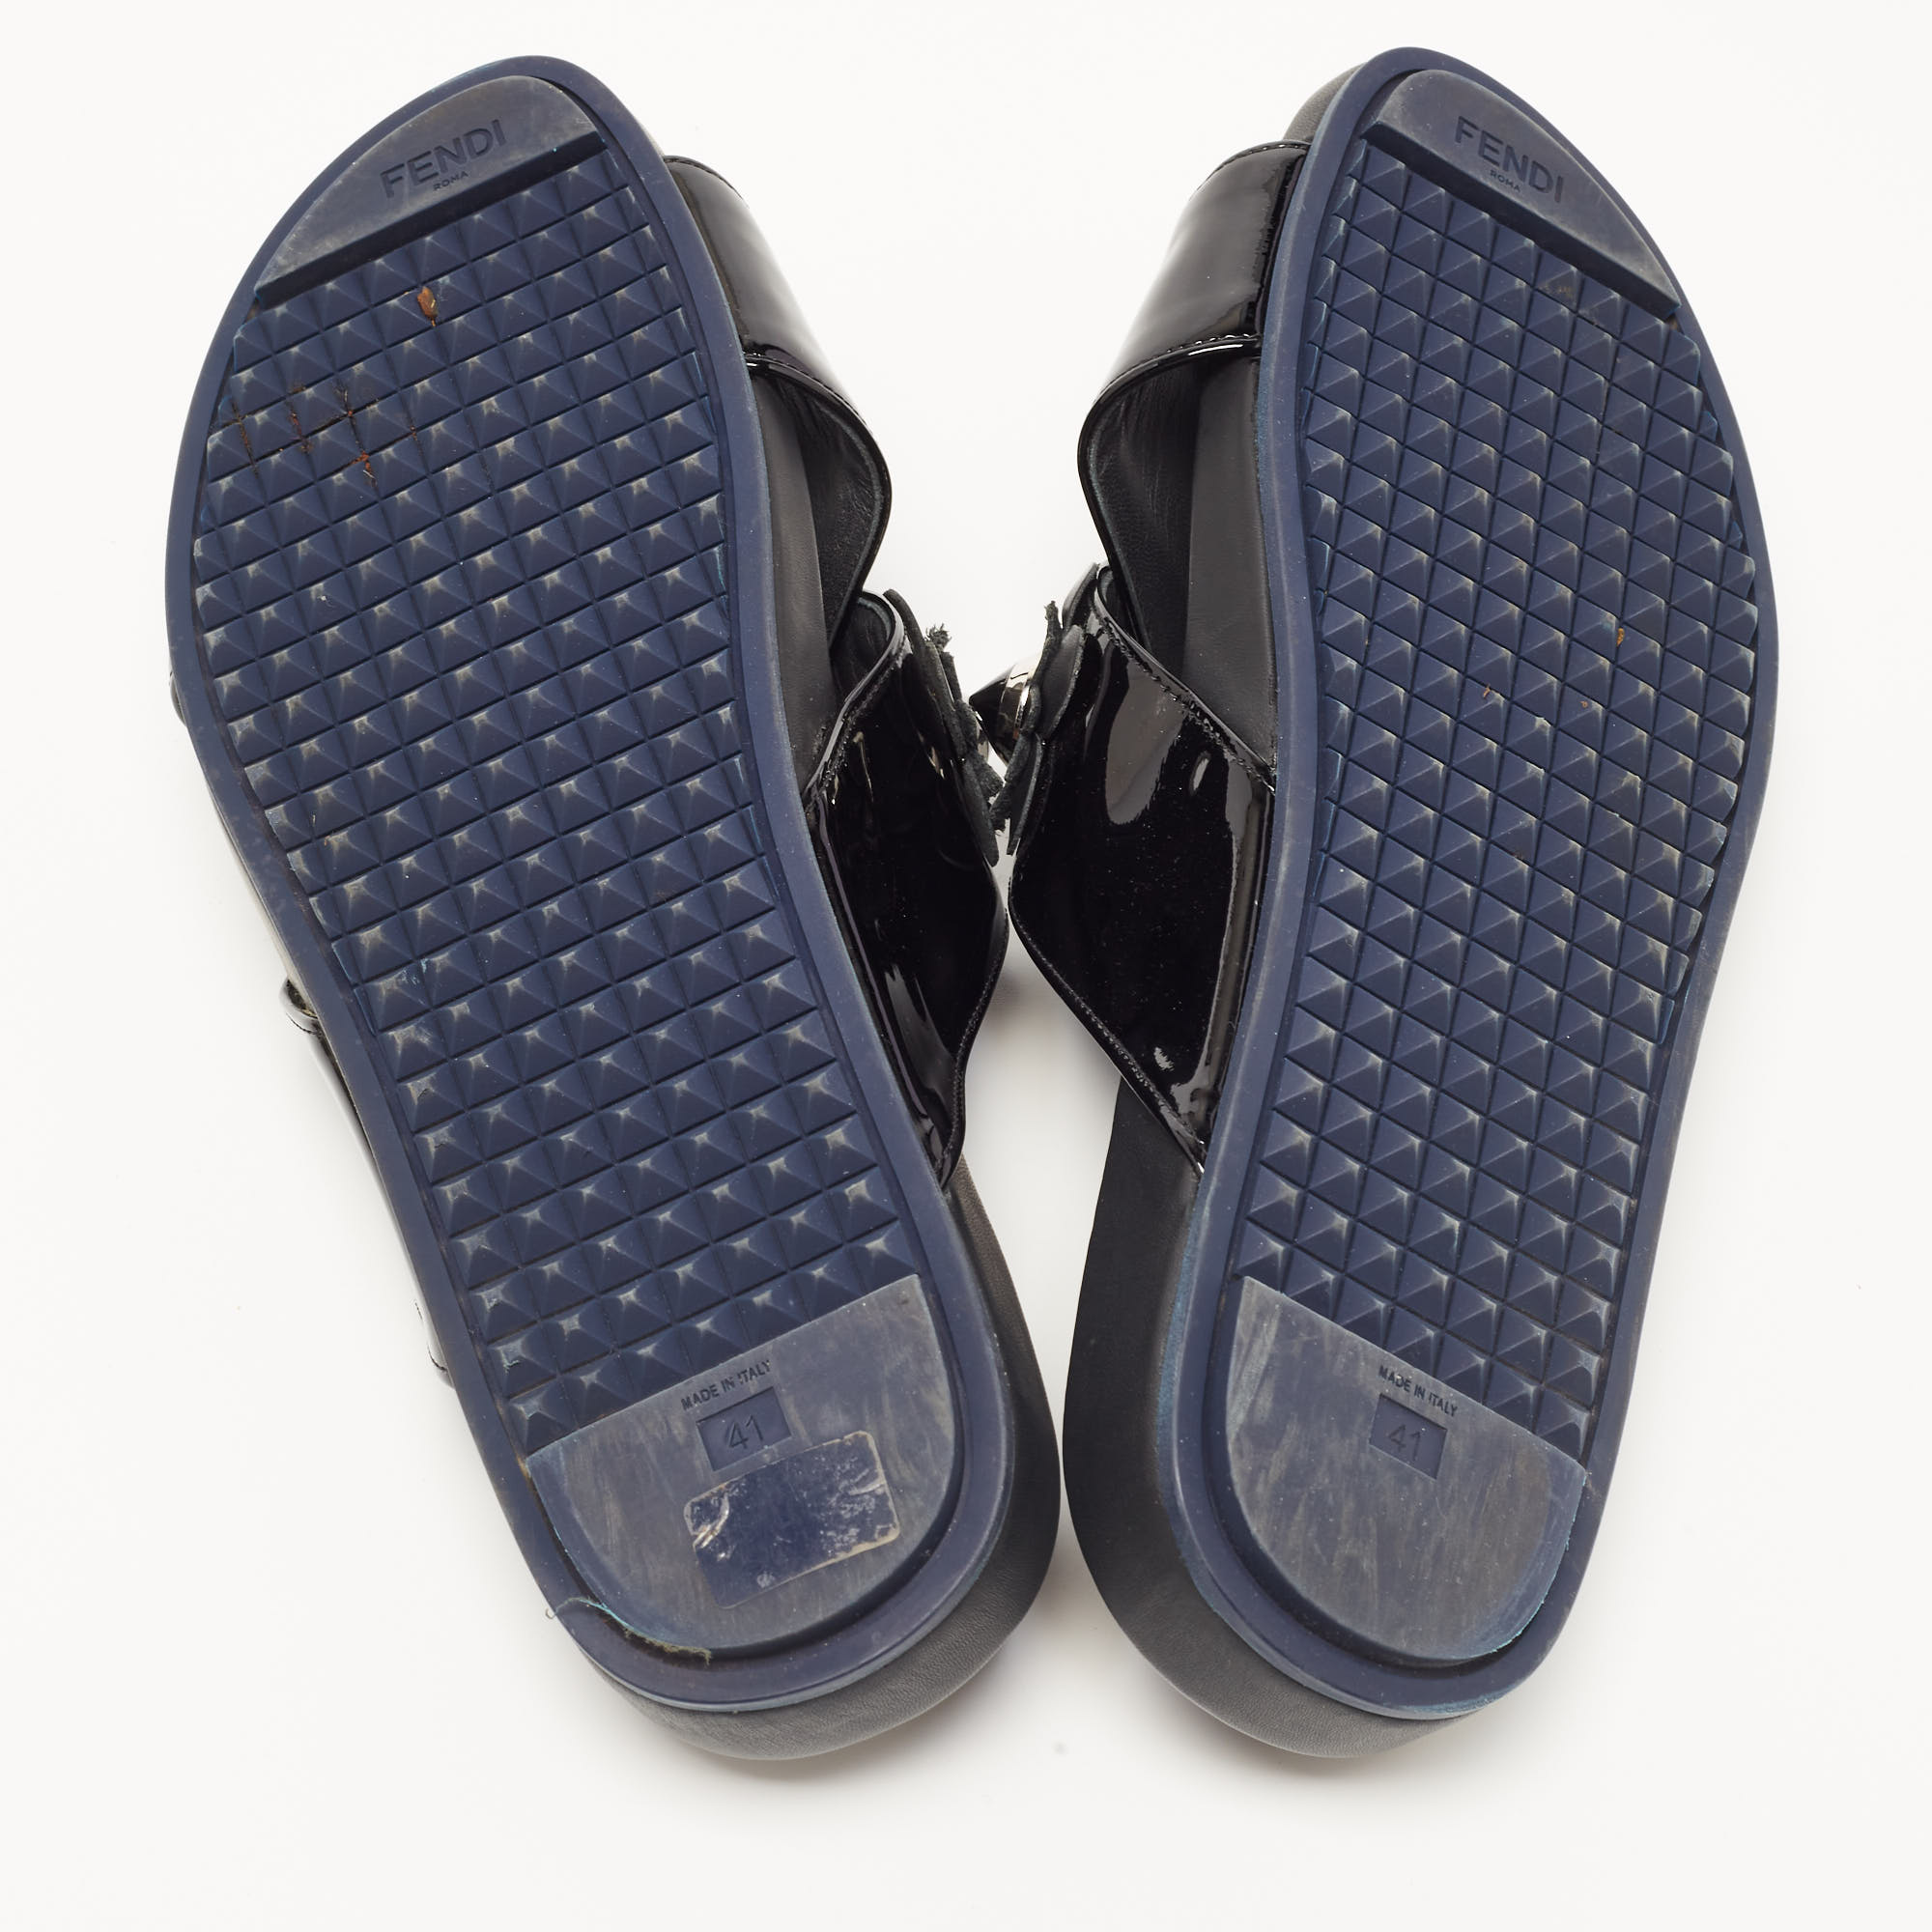 Fendi Black Patent Leather Flowerland Stud Criss Cross Flat Sandals Size 41